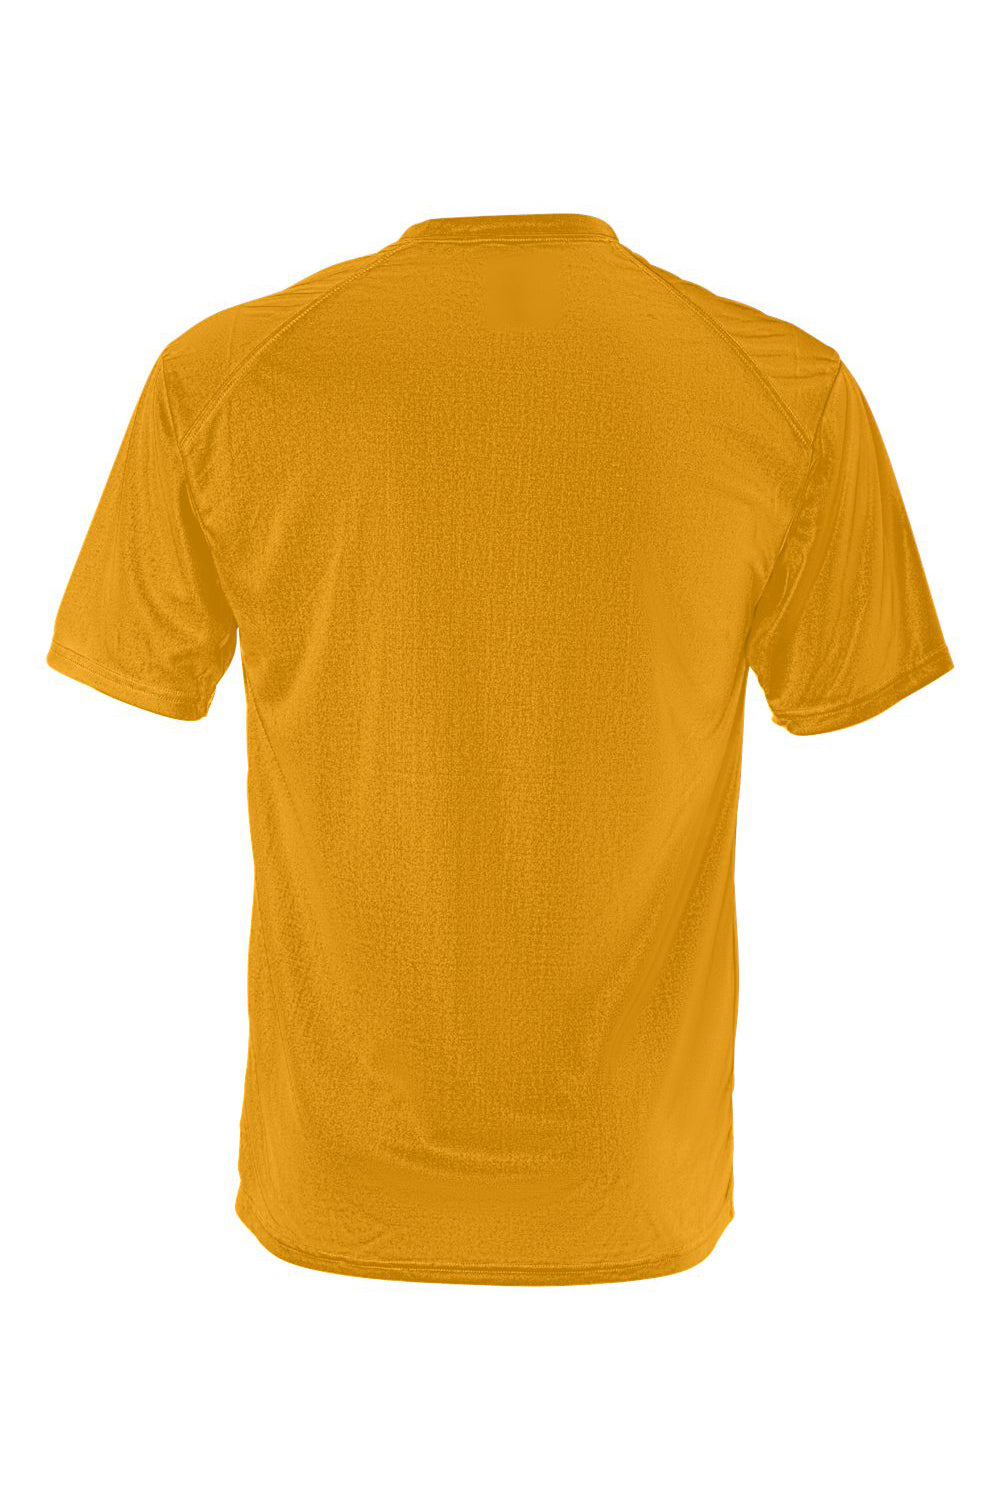 Badger 4120 Mens B-Core Moisture Wicking Short Sleeve Crewneck T-Shirt Gold Flat Back